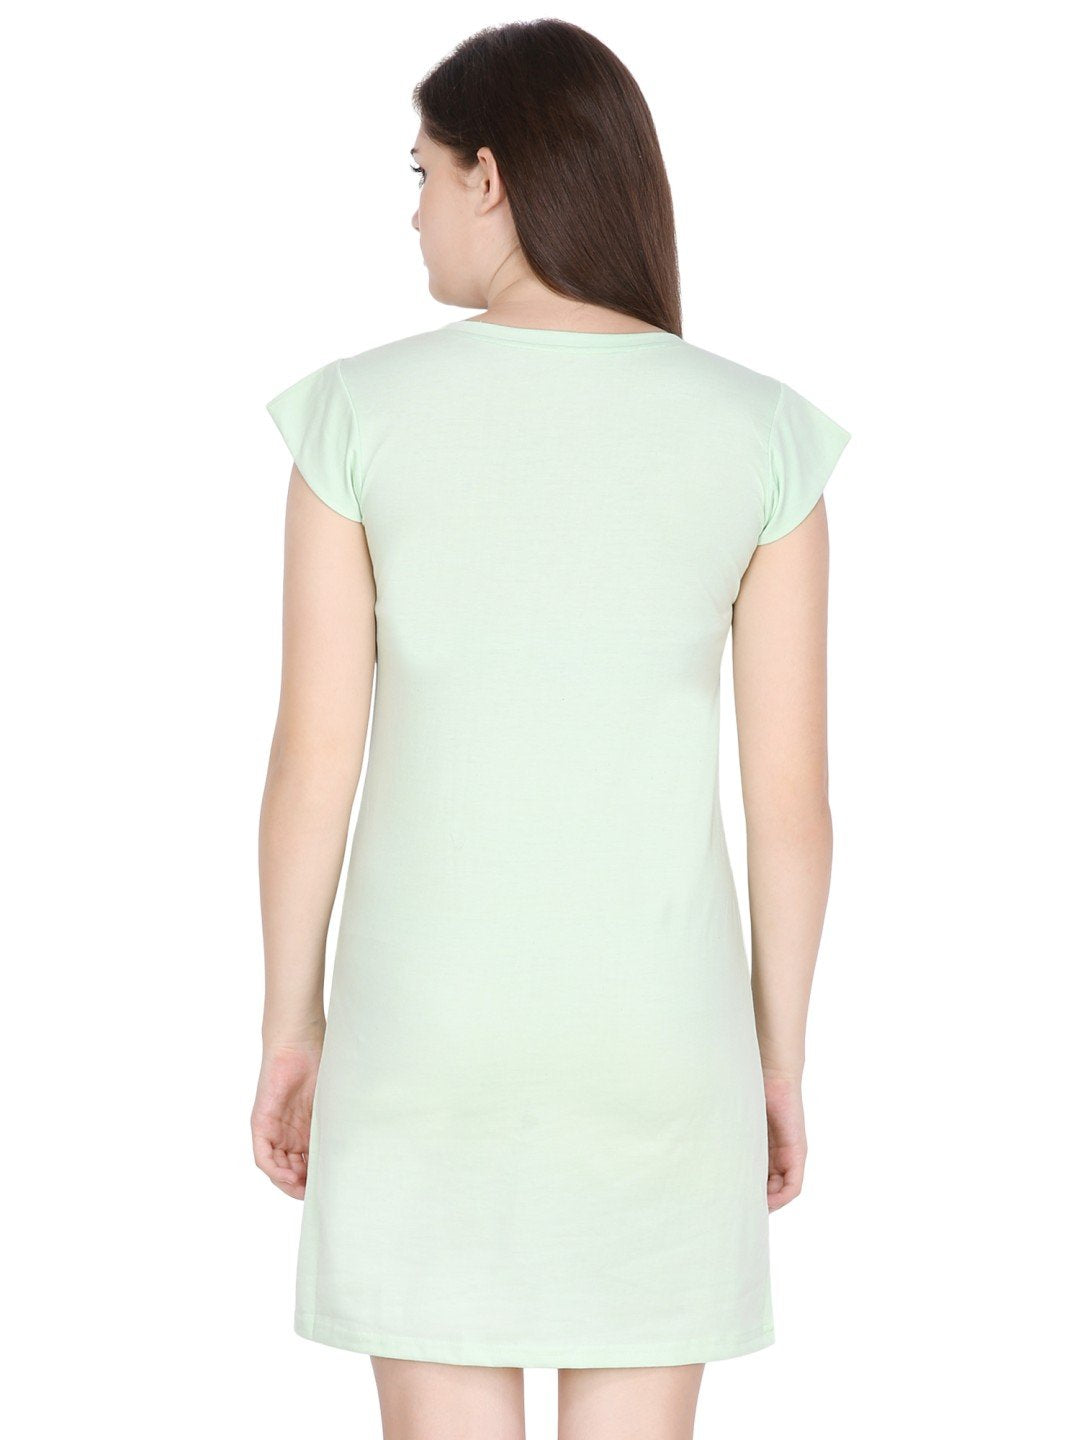 Klamotten Women's Printed Cotton Sleepshirt S10Gs